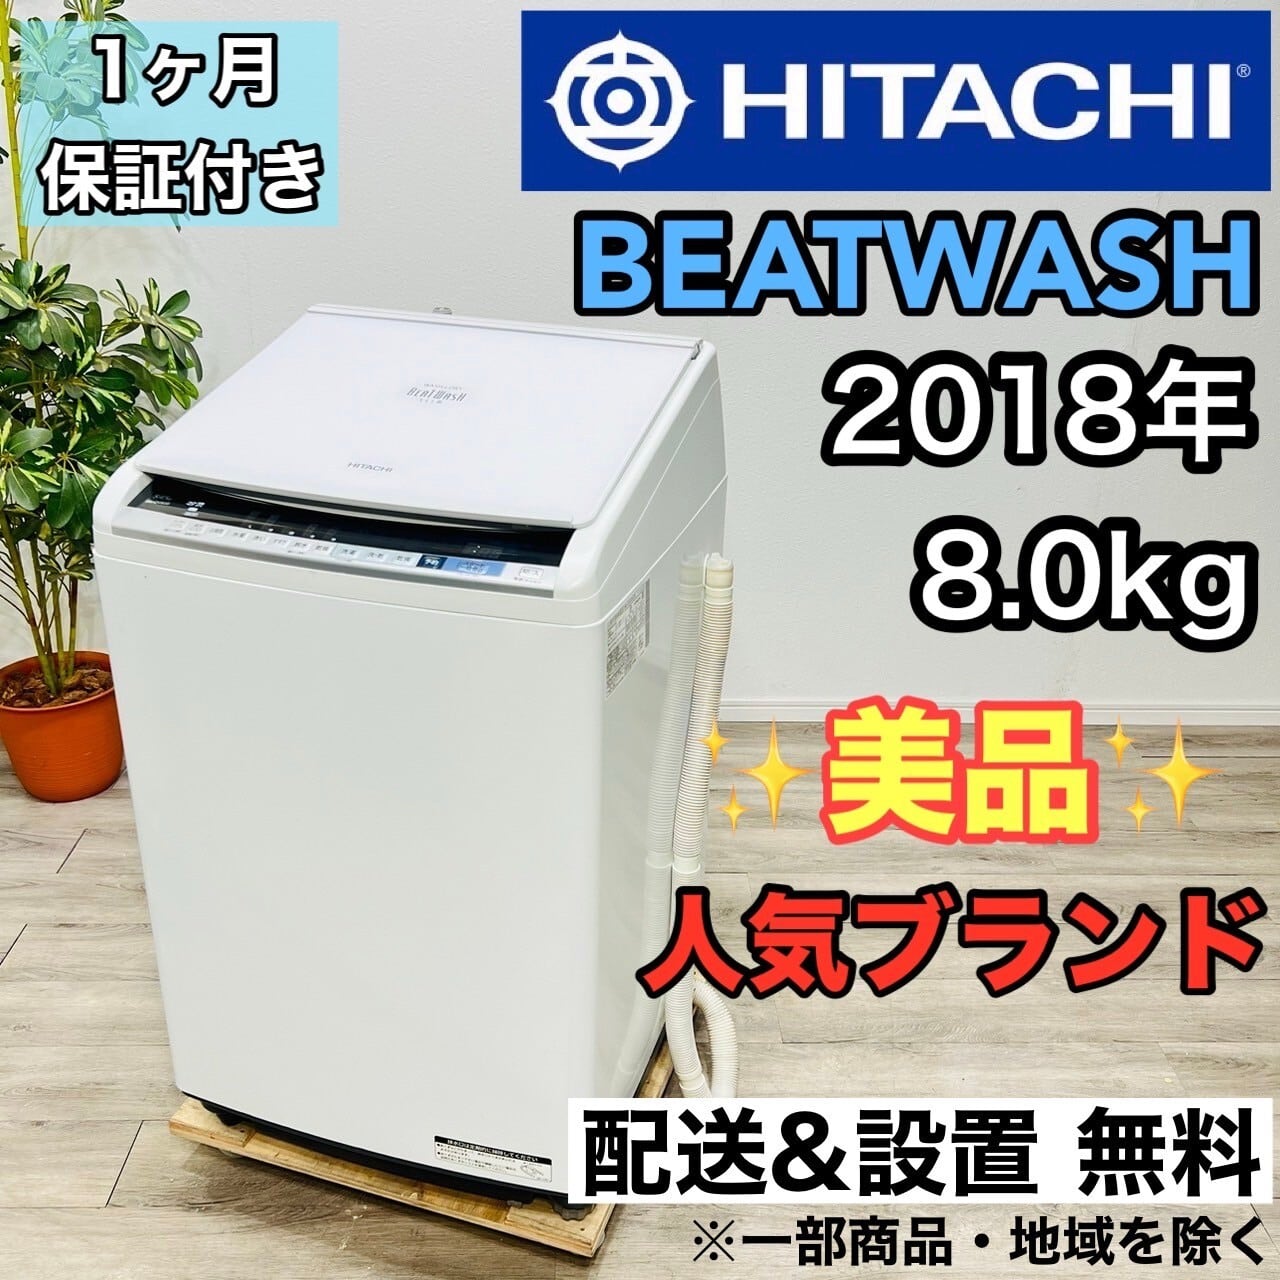 ♦️HITACHI a1934 洗濯機 8.0kg 2018年製 11♦️関西リユース本舗